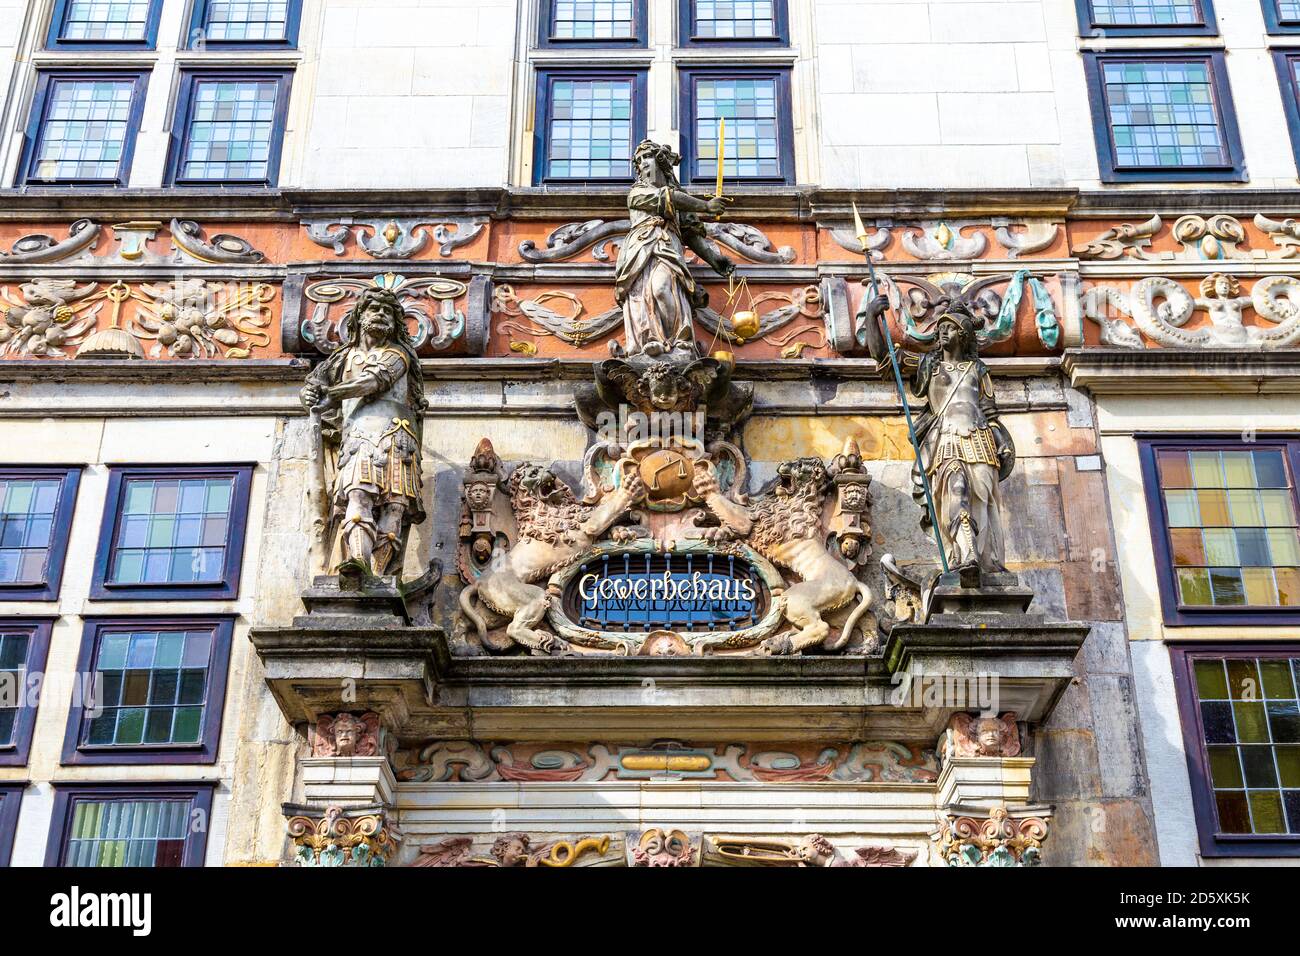 17th Century Gewerbehaus in Bremen, Germany Stock Photo